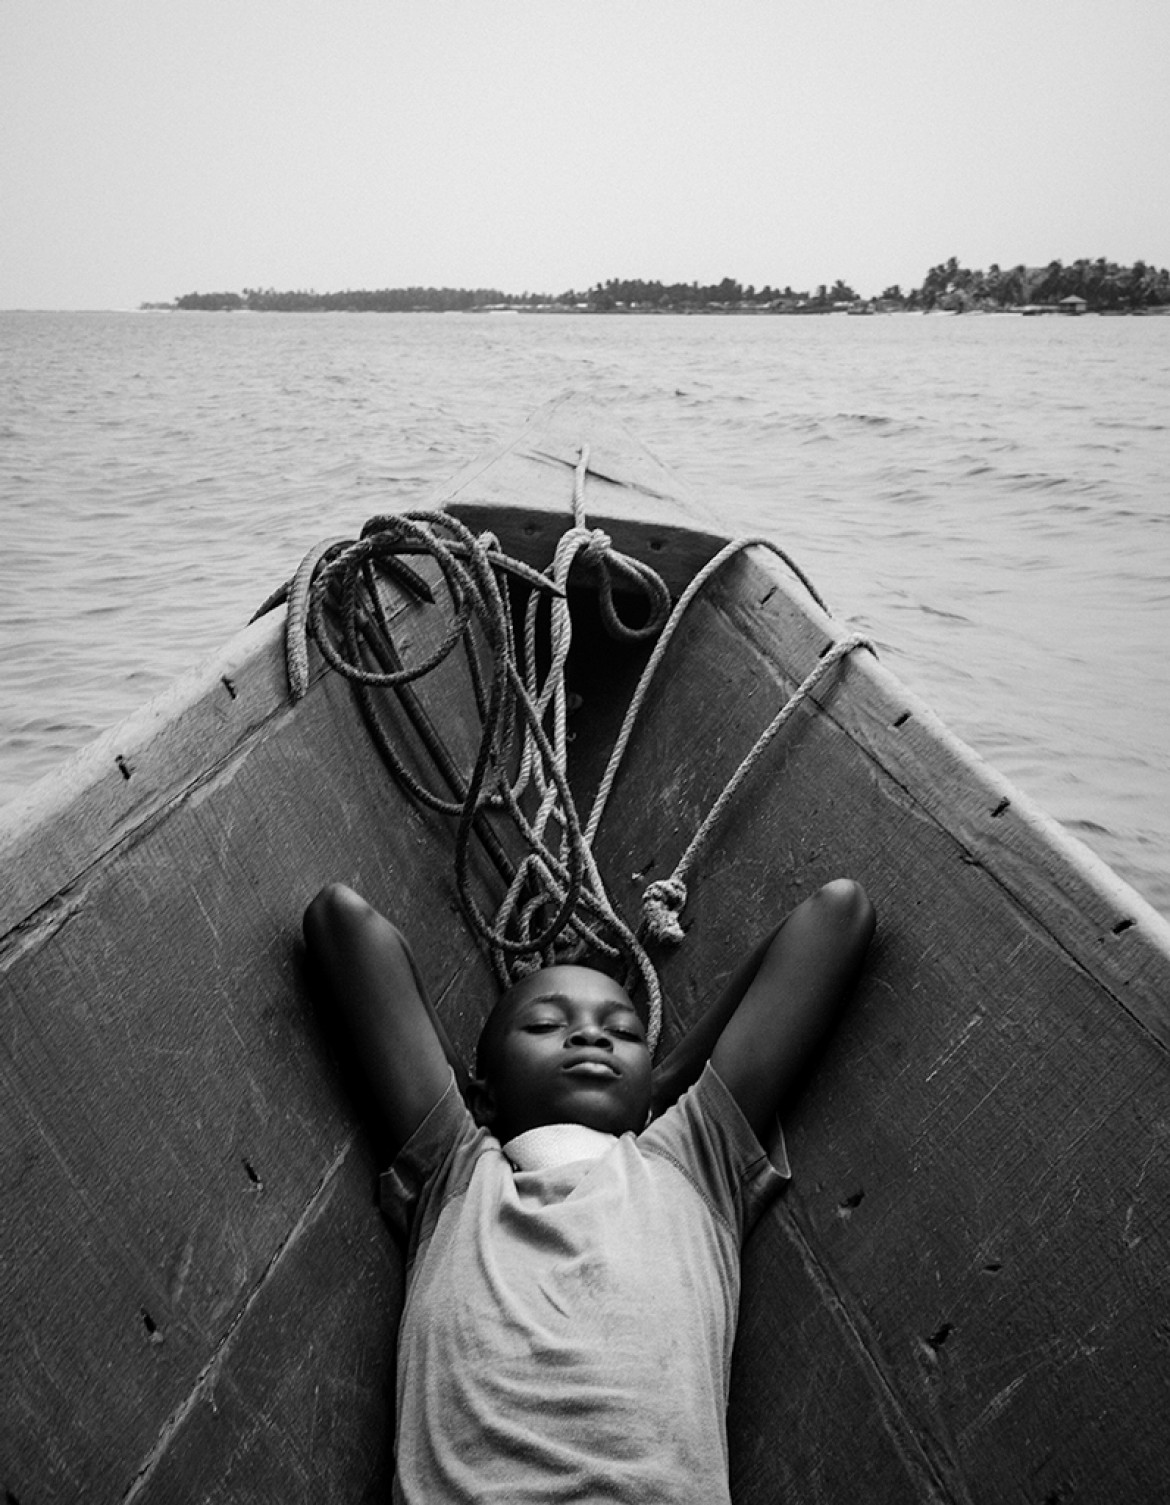 fot. Antoine Jonquiere, "Joseph, 11, Ghana 2019", 3. miejsce w kategorii Documentary & Street